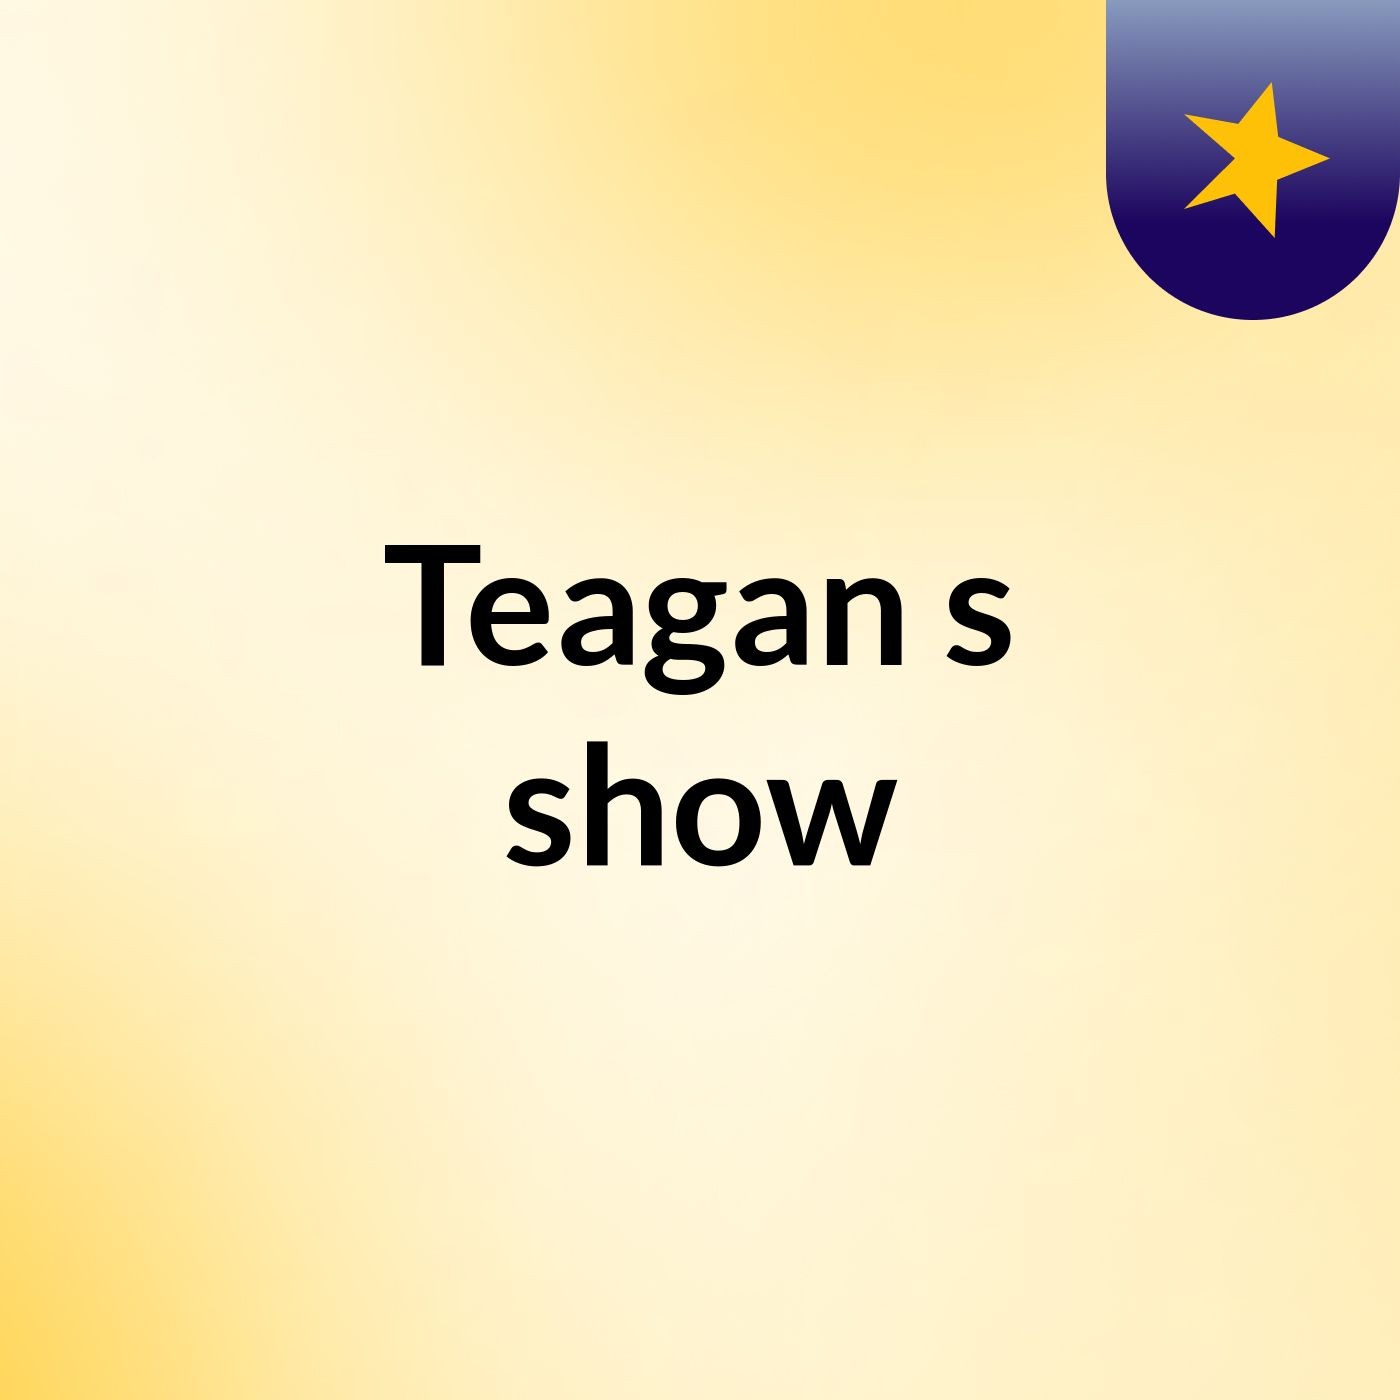 Teagan's show